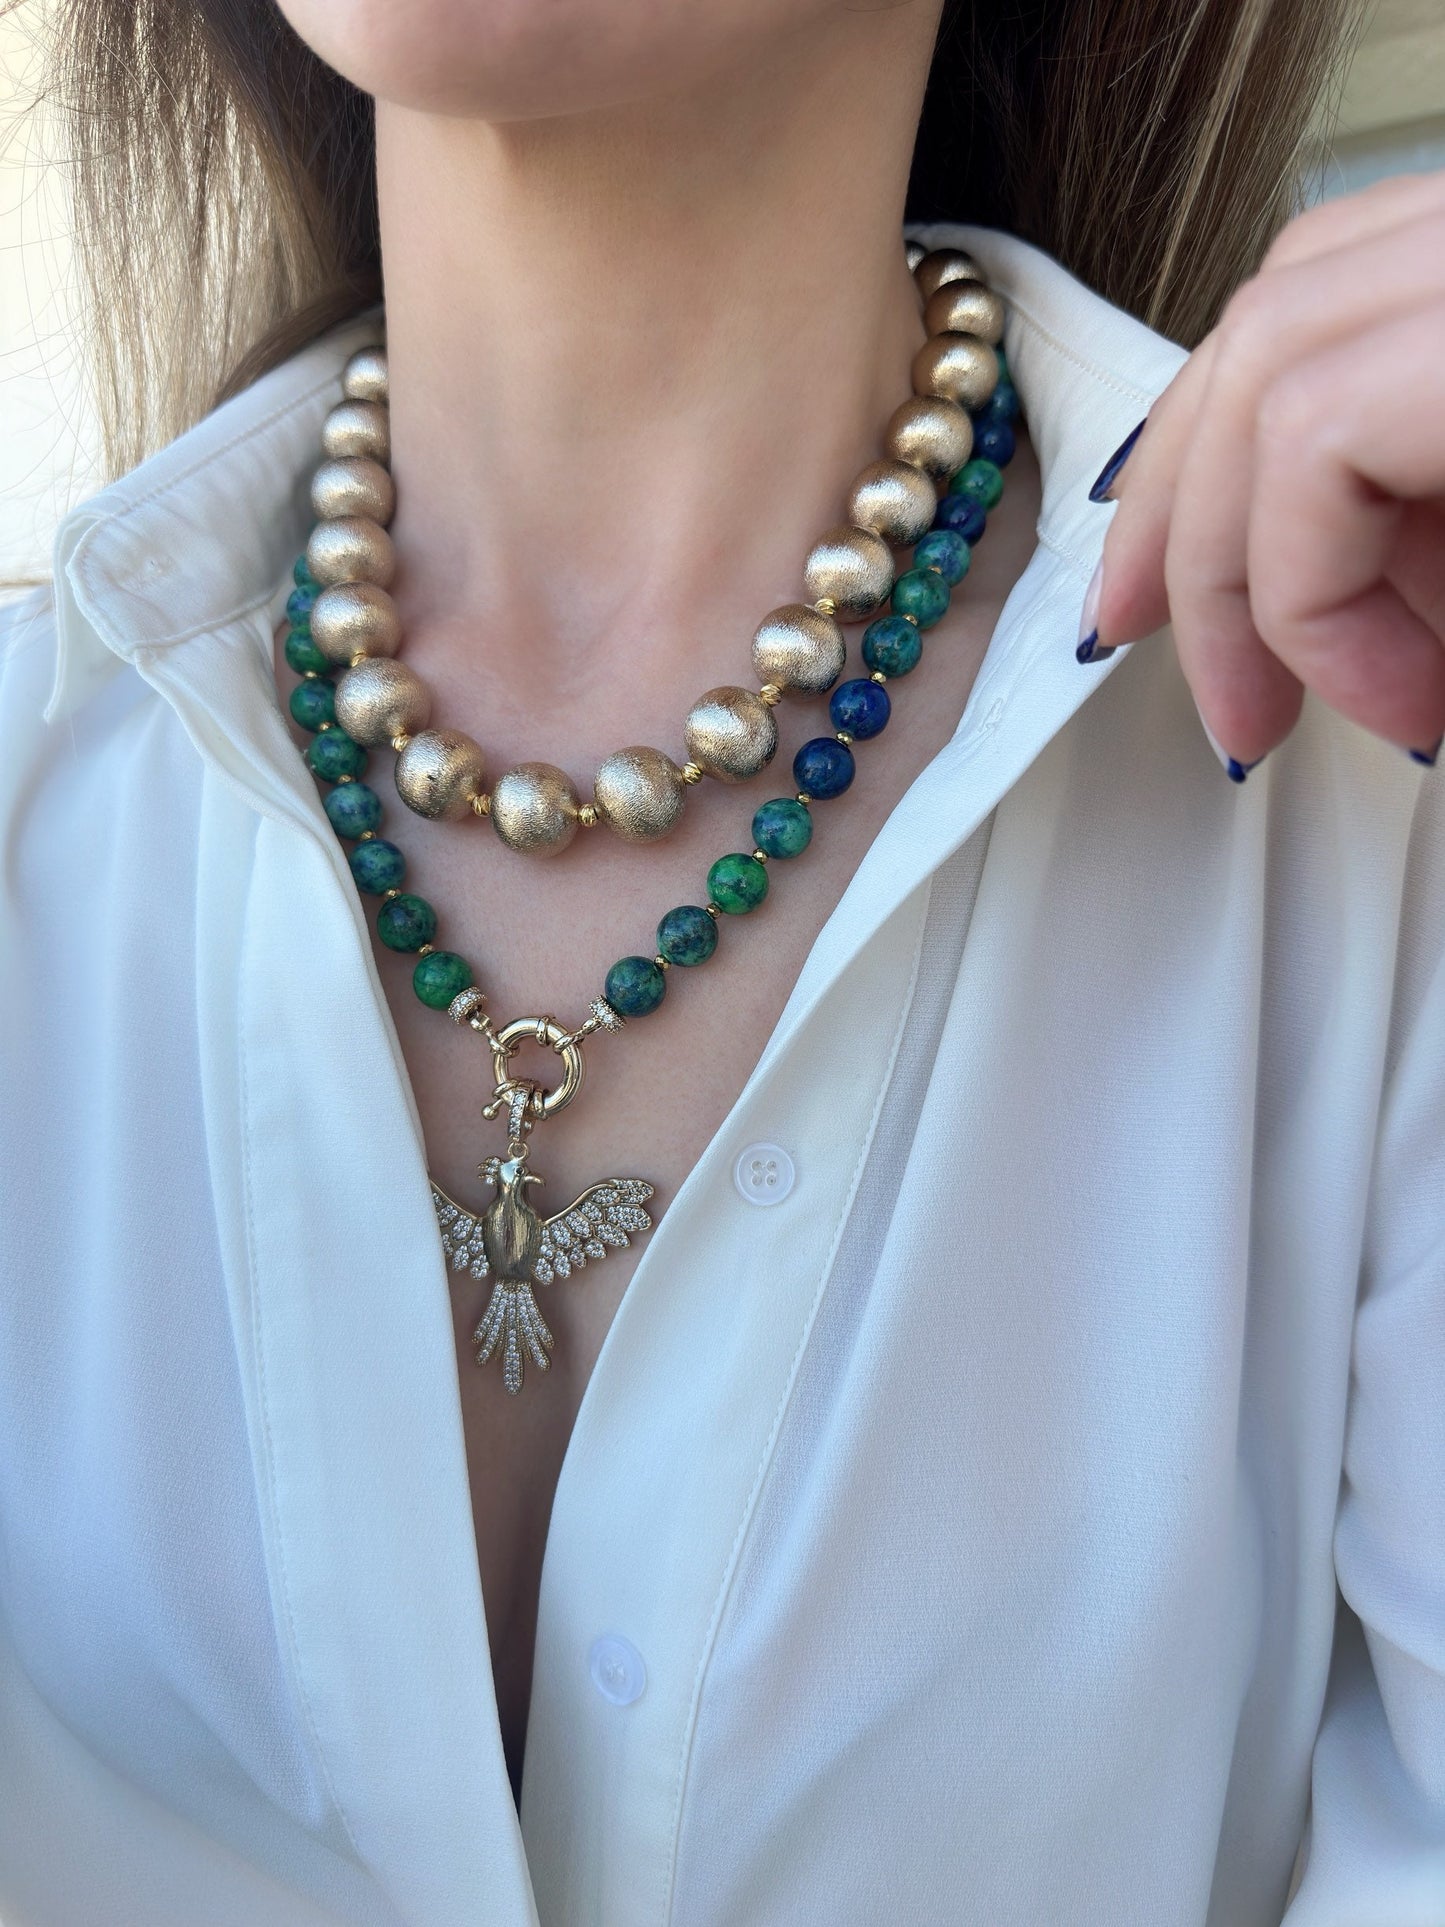 Gemstone Necklace, Big Brass Balls with Azurite Beads, Phoenix Necklace for Birthday Gifts, Handmade Statement Necklace